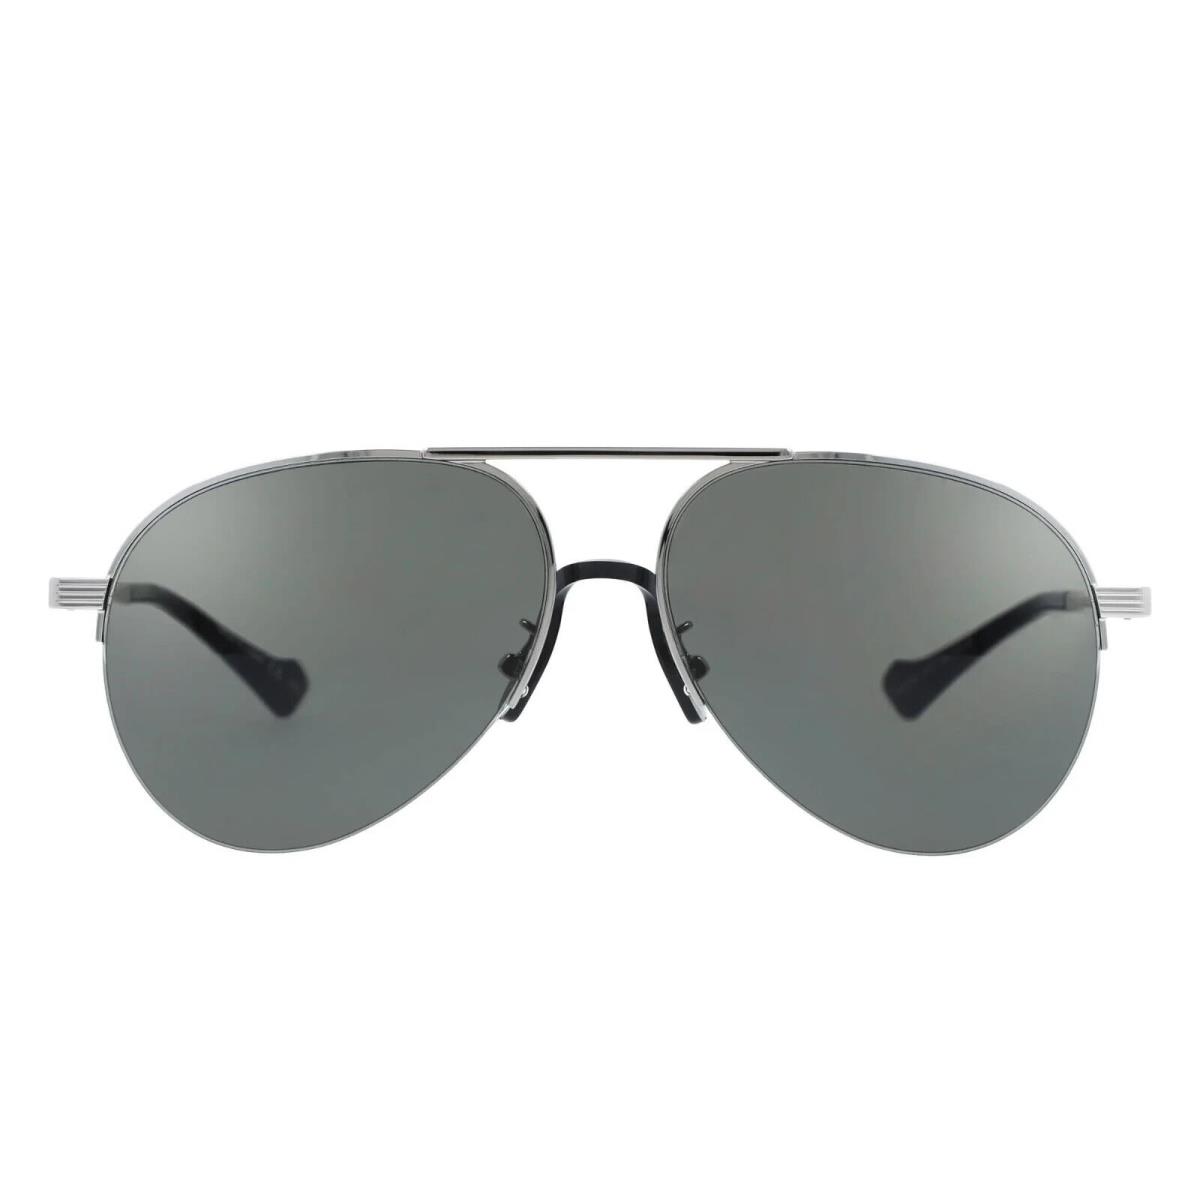 Gucci GG0742S-001 Silver Frame / Gray Lens Sunglasses